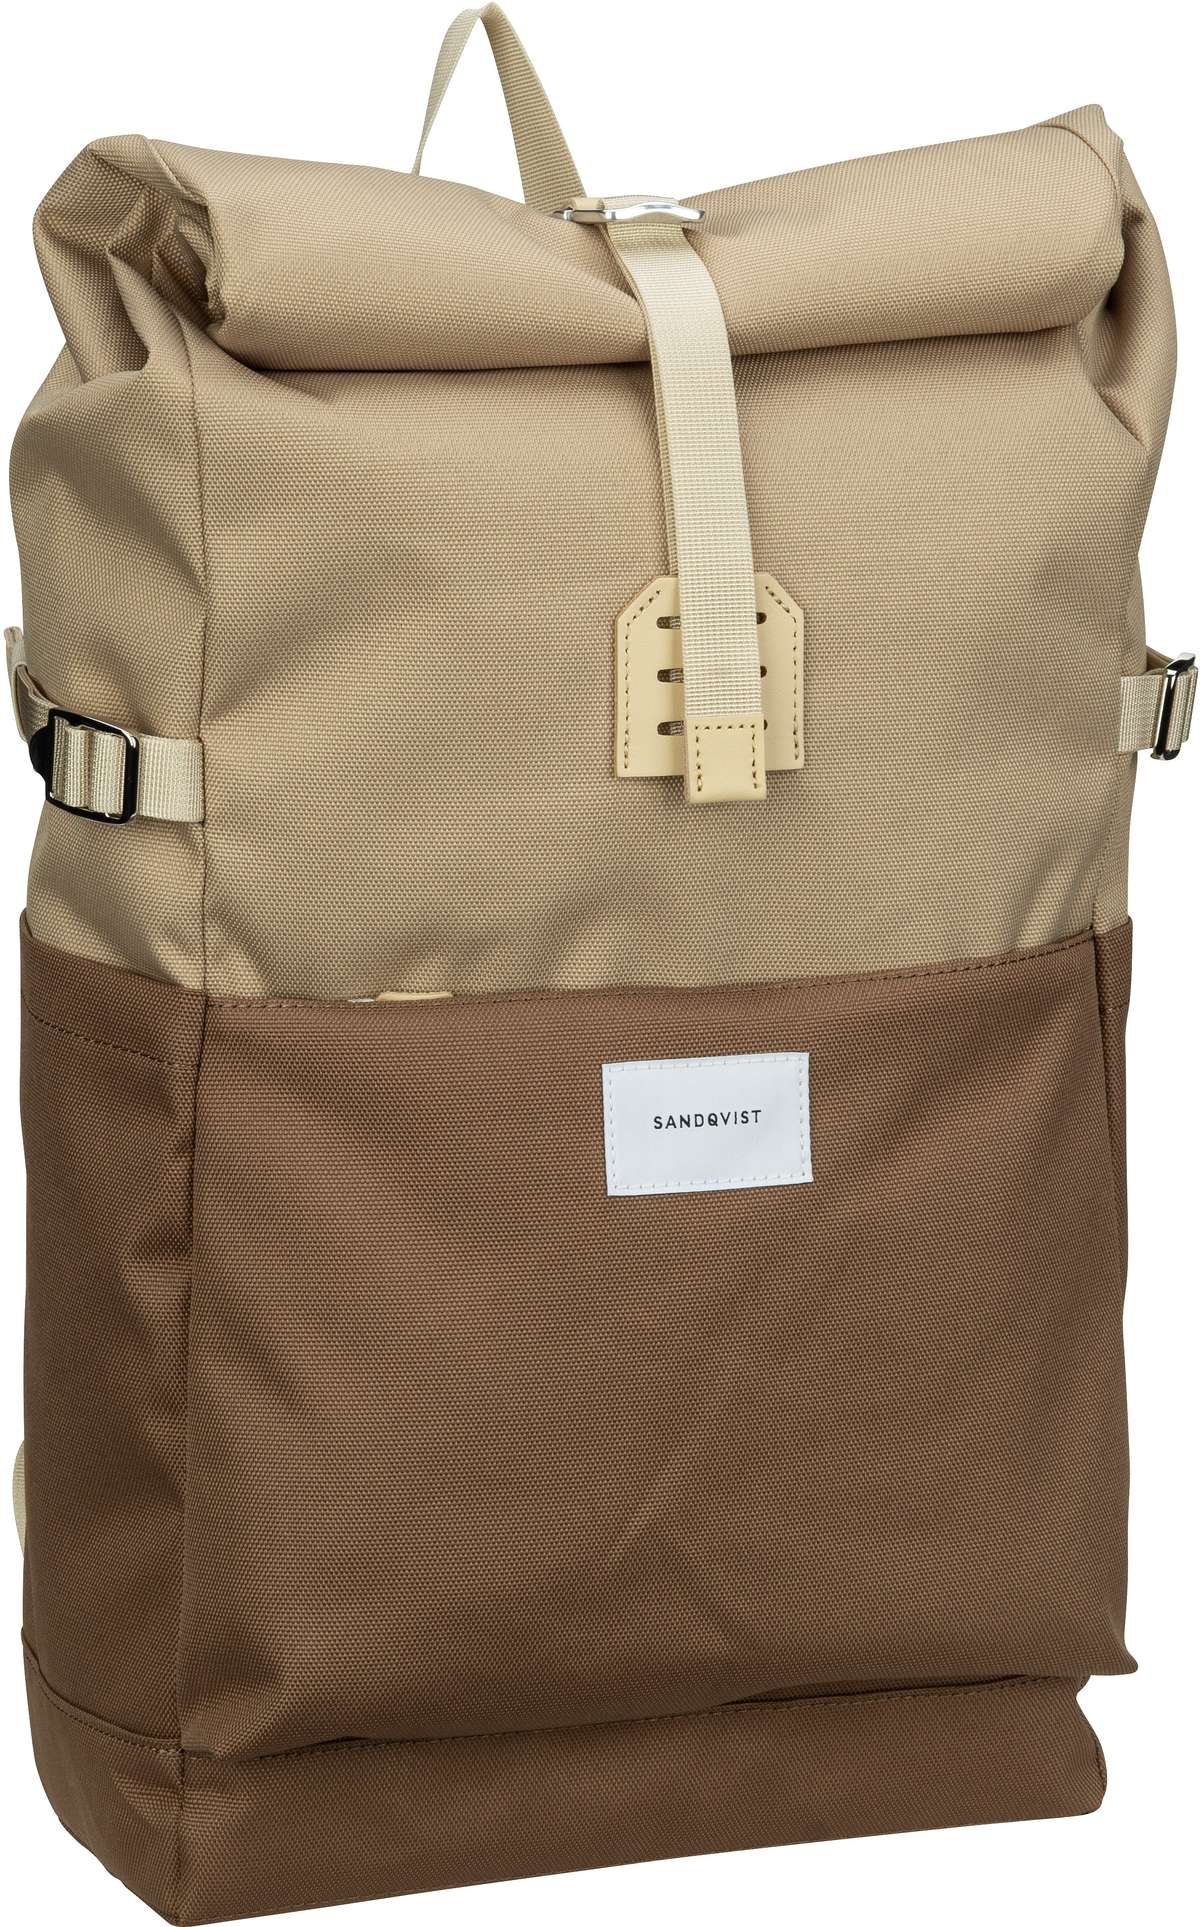 Sandqvist Ilon Rolltop Backpack - Multi Brown/Natural Leather